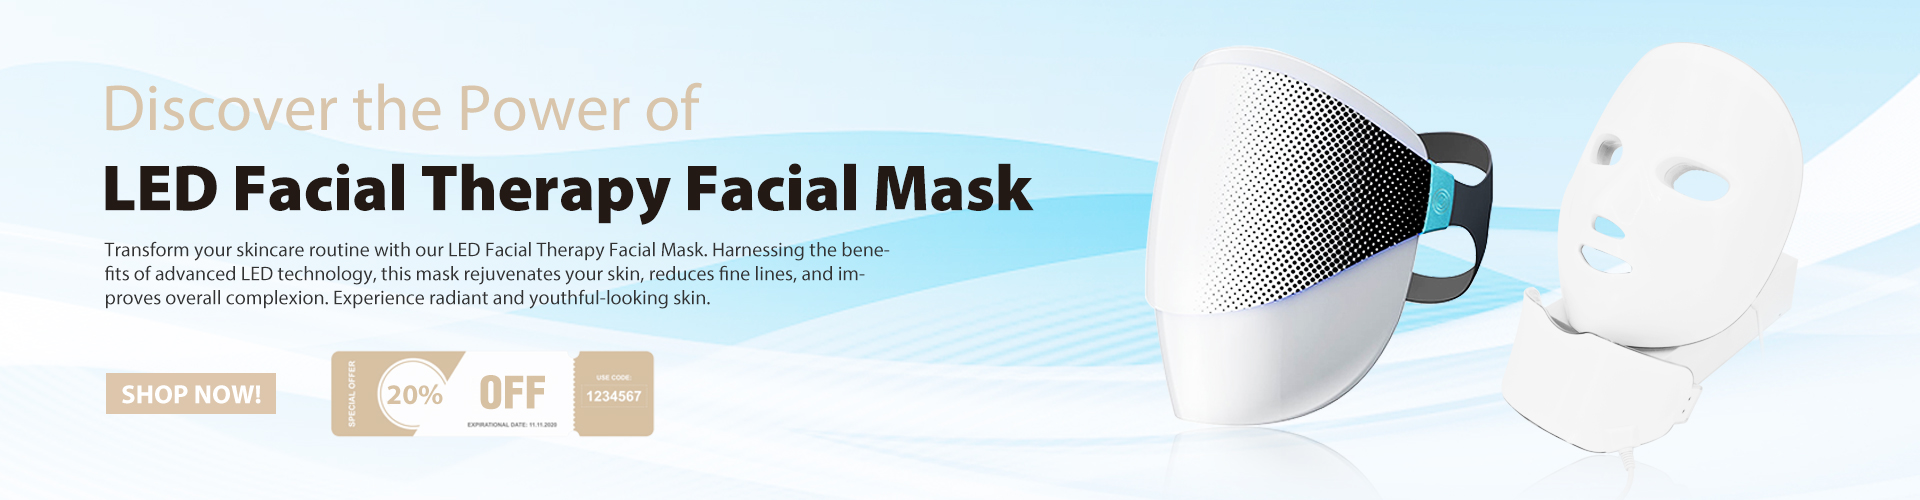 led facial mask